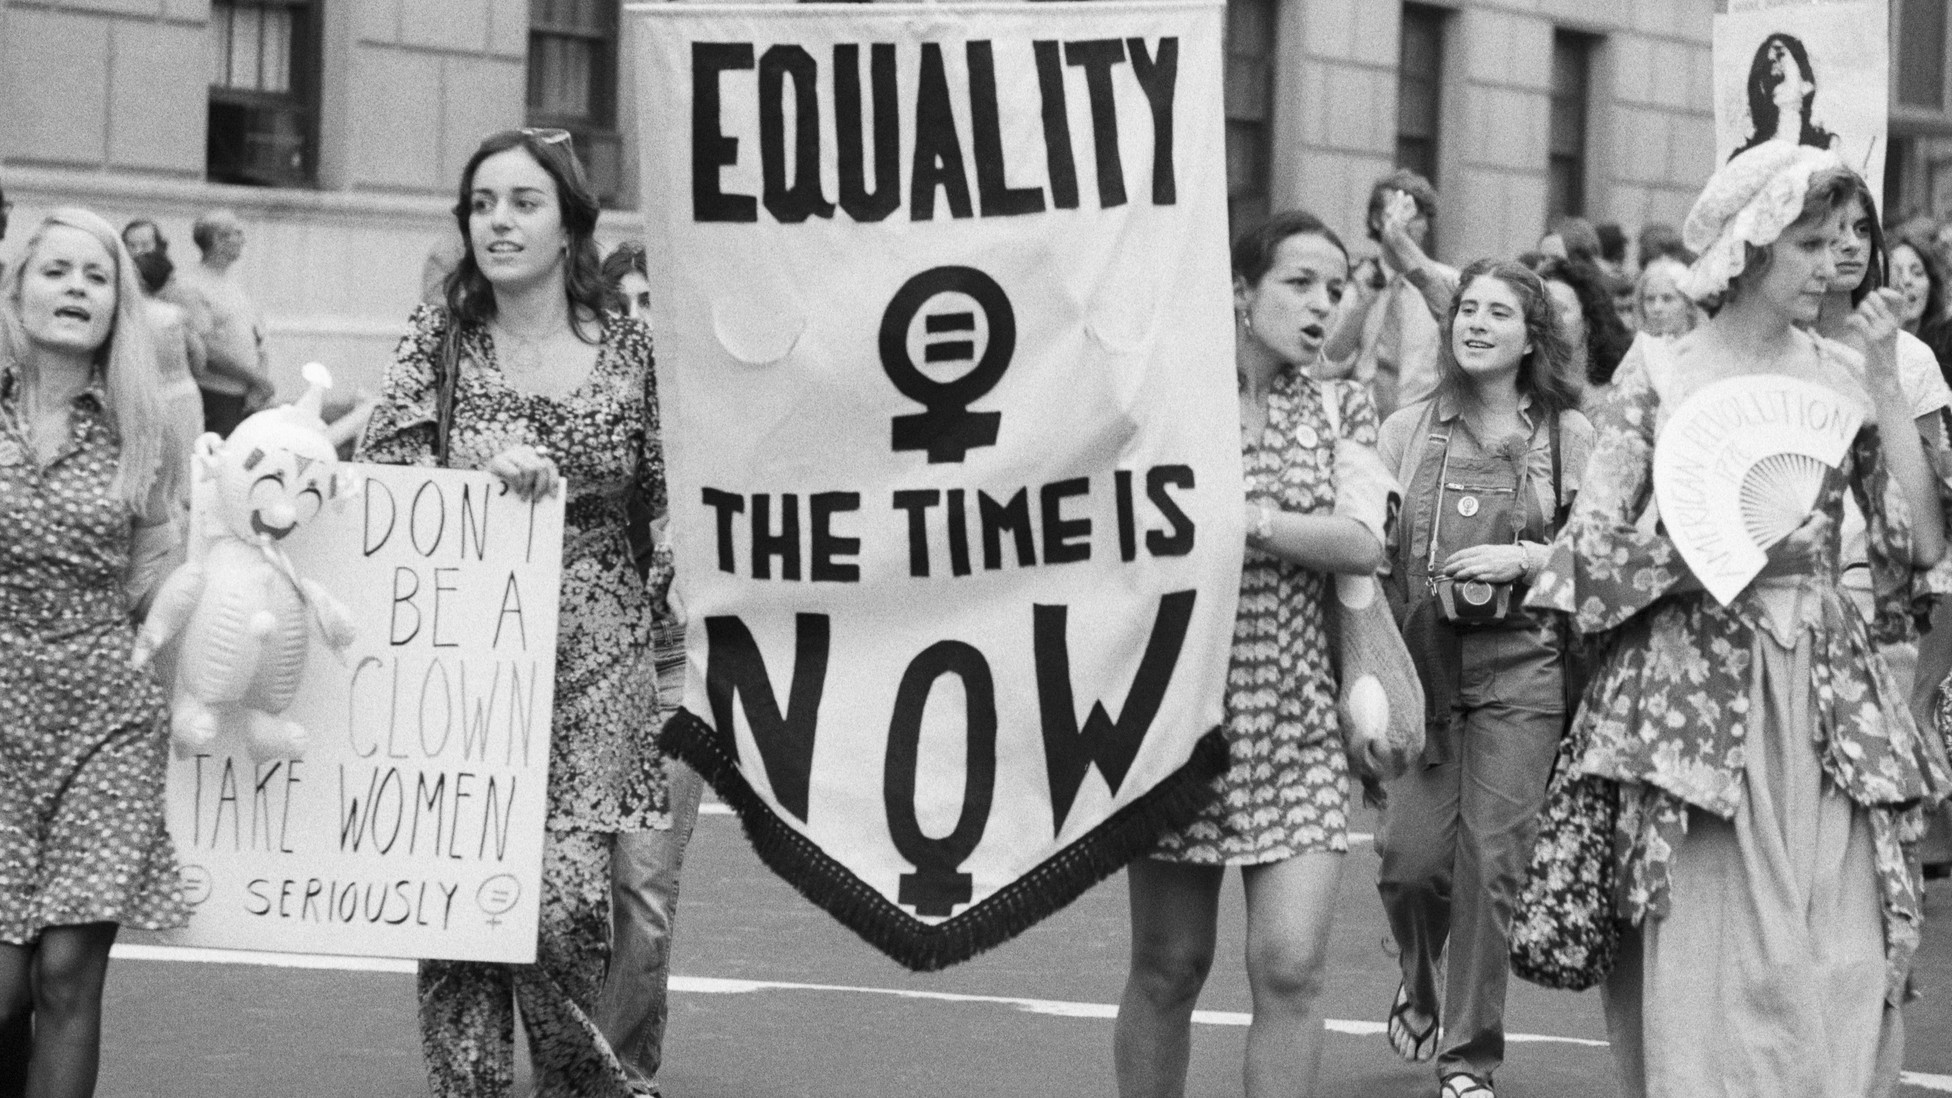 Feminism feminismus welle feminist erste ersten kurze men equality recognizes humanity